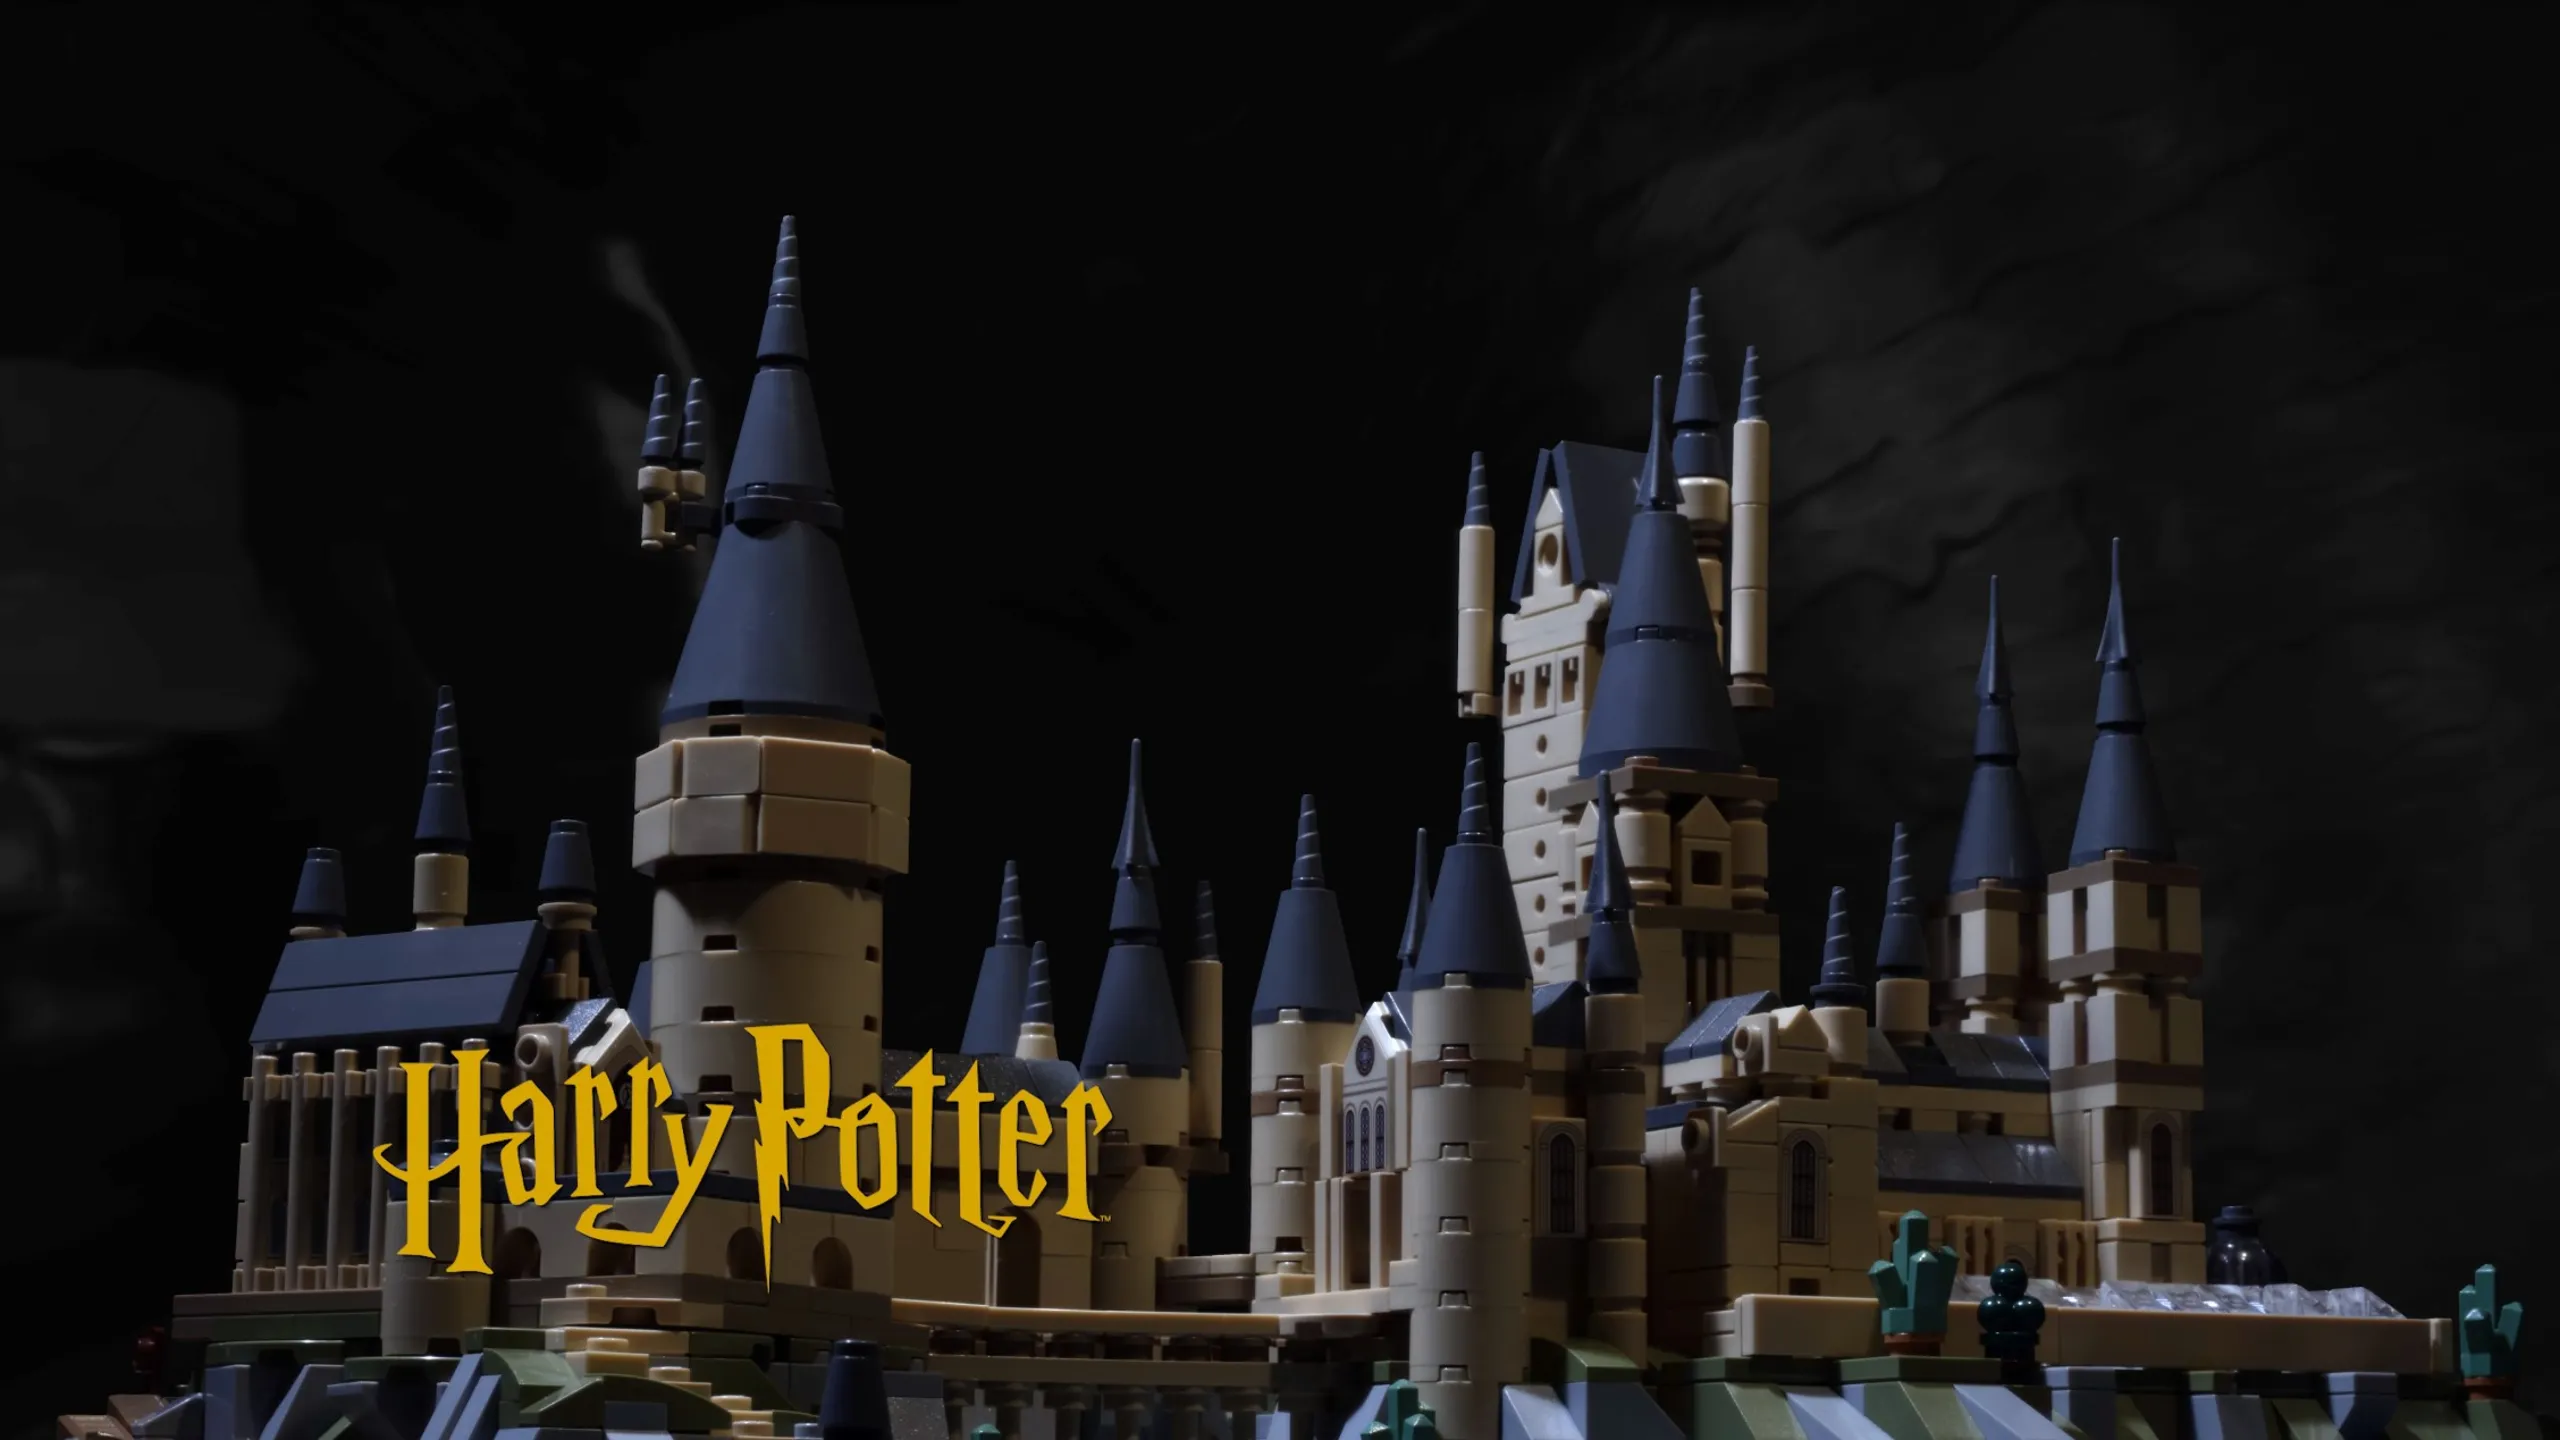  Diario Hogwarts de Harry Potter : Productos de Oficina